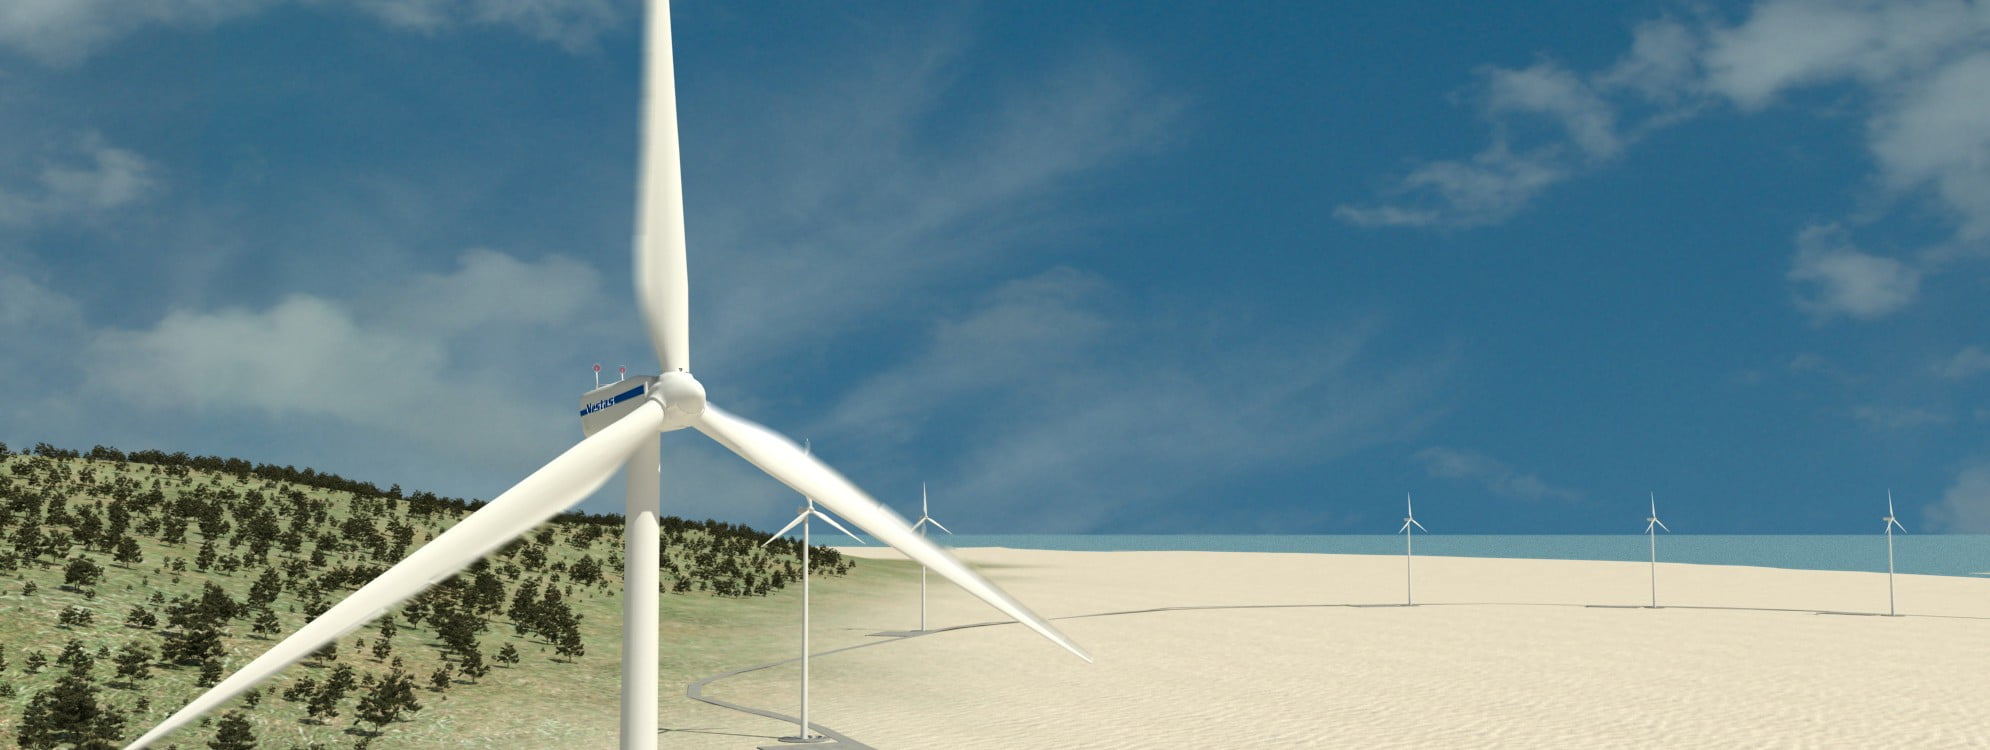 3D model of wind turbine e1446641222739 أبدع 6 تصميمات هندسية لتوربينات الرياح مجلة نقطة العلمية